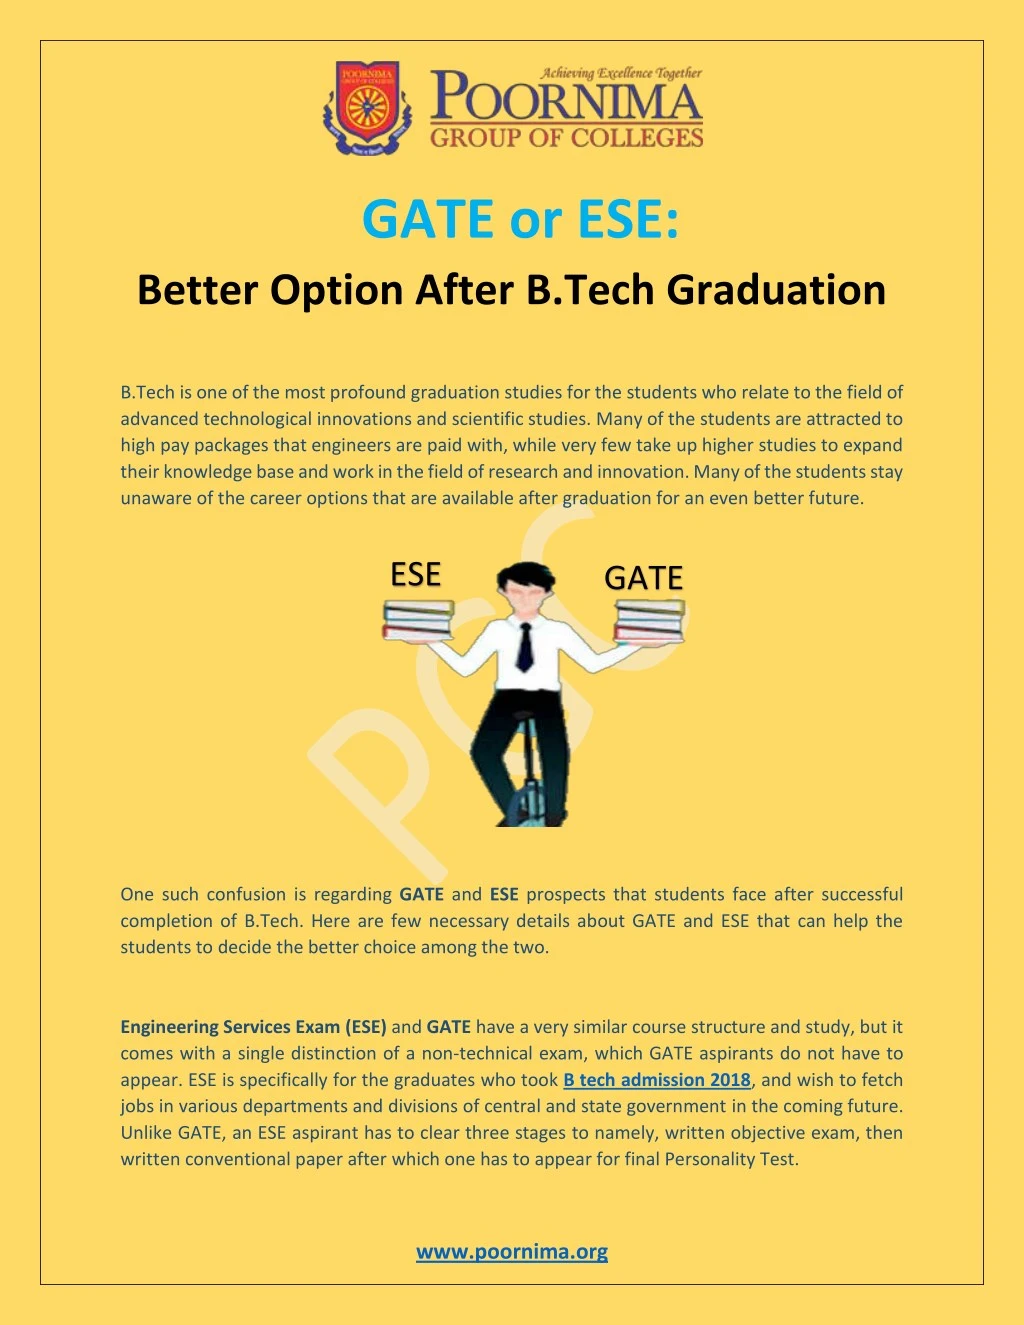 gate or ese